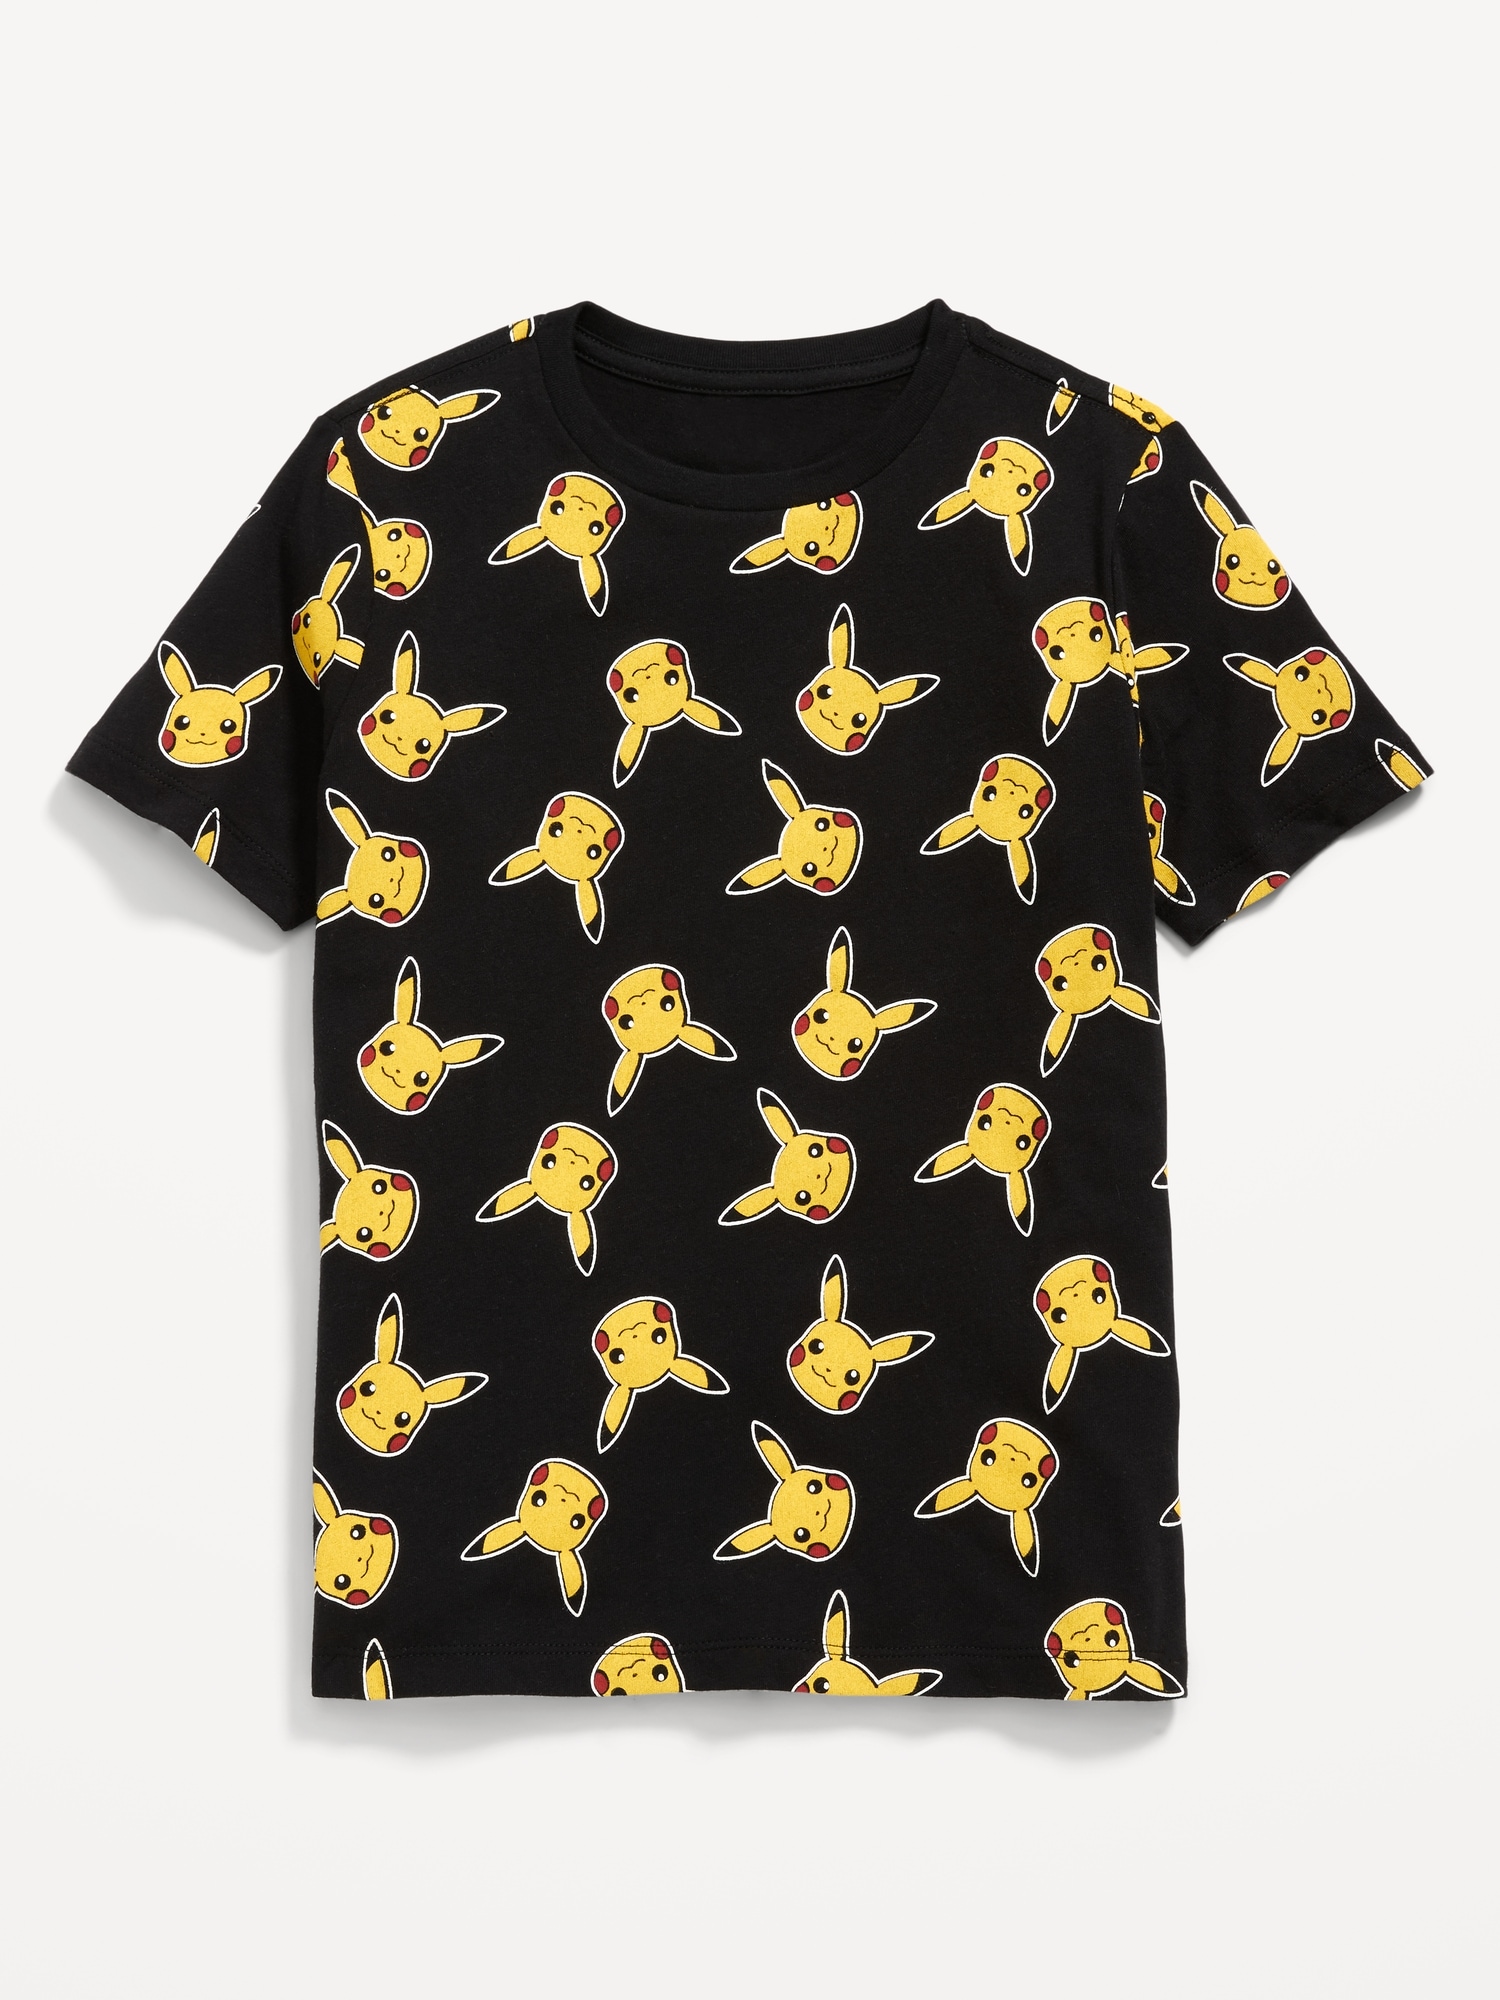 Overeenkomend Vernauwd knal Matching Pokémon™ Pikachu Gender-Neutral Graphic T-Shirt for Kids | Old Navy